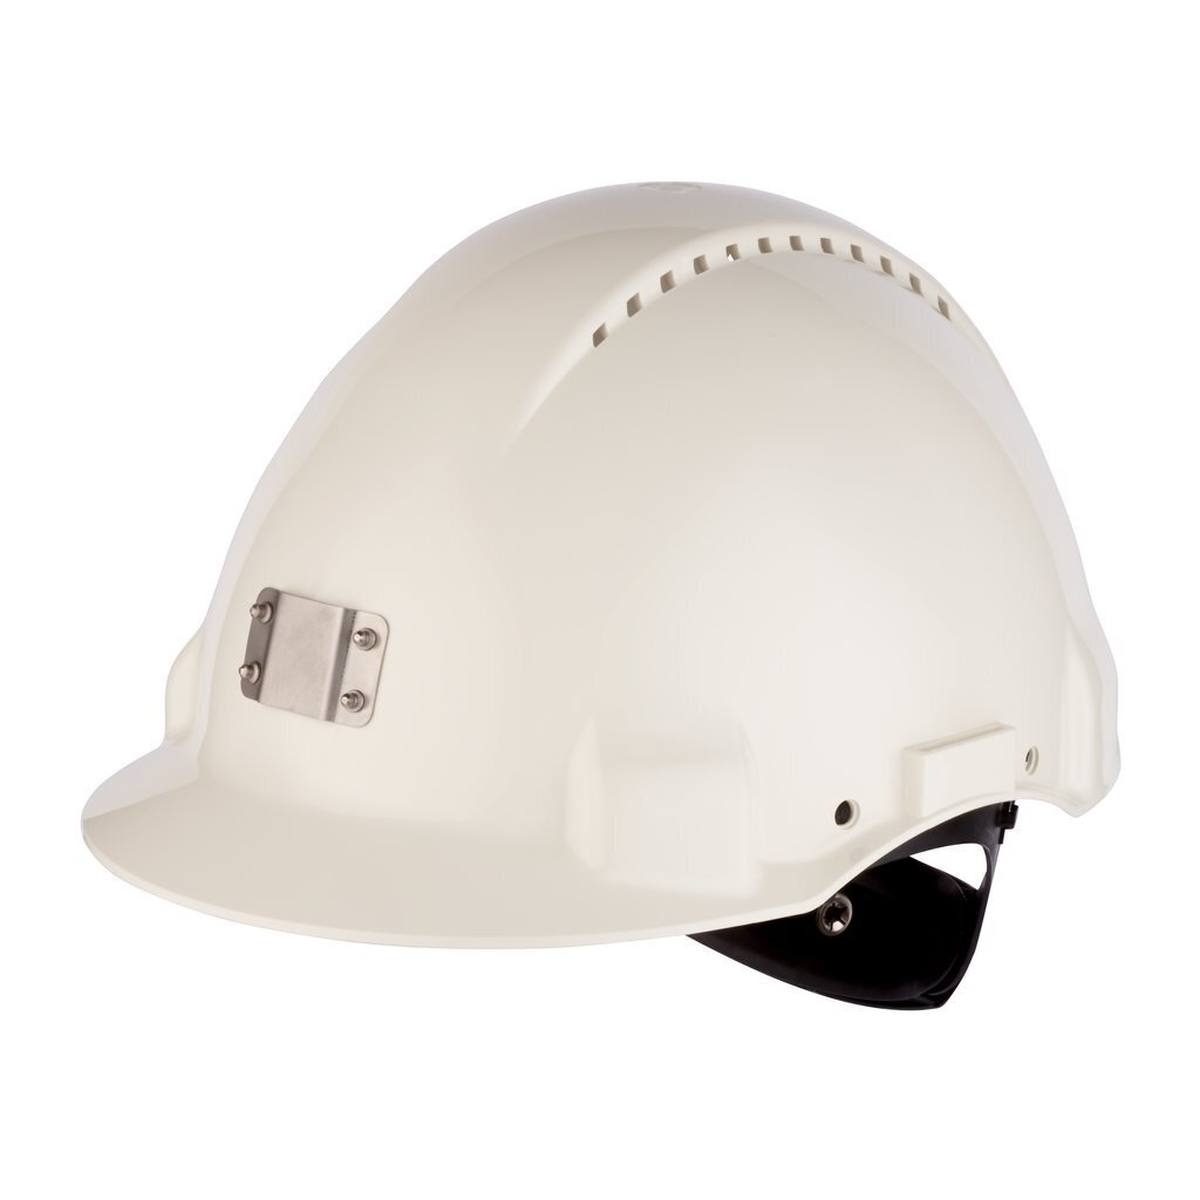 3M G3000 safety helmet G3000NUV-10-VI in white, uvicator, ratchet fastener, ventilated, plastic sweatband, lamp holder